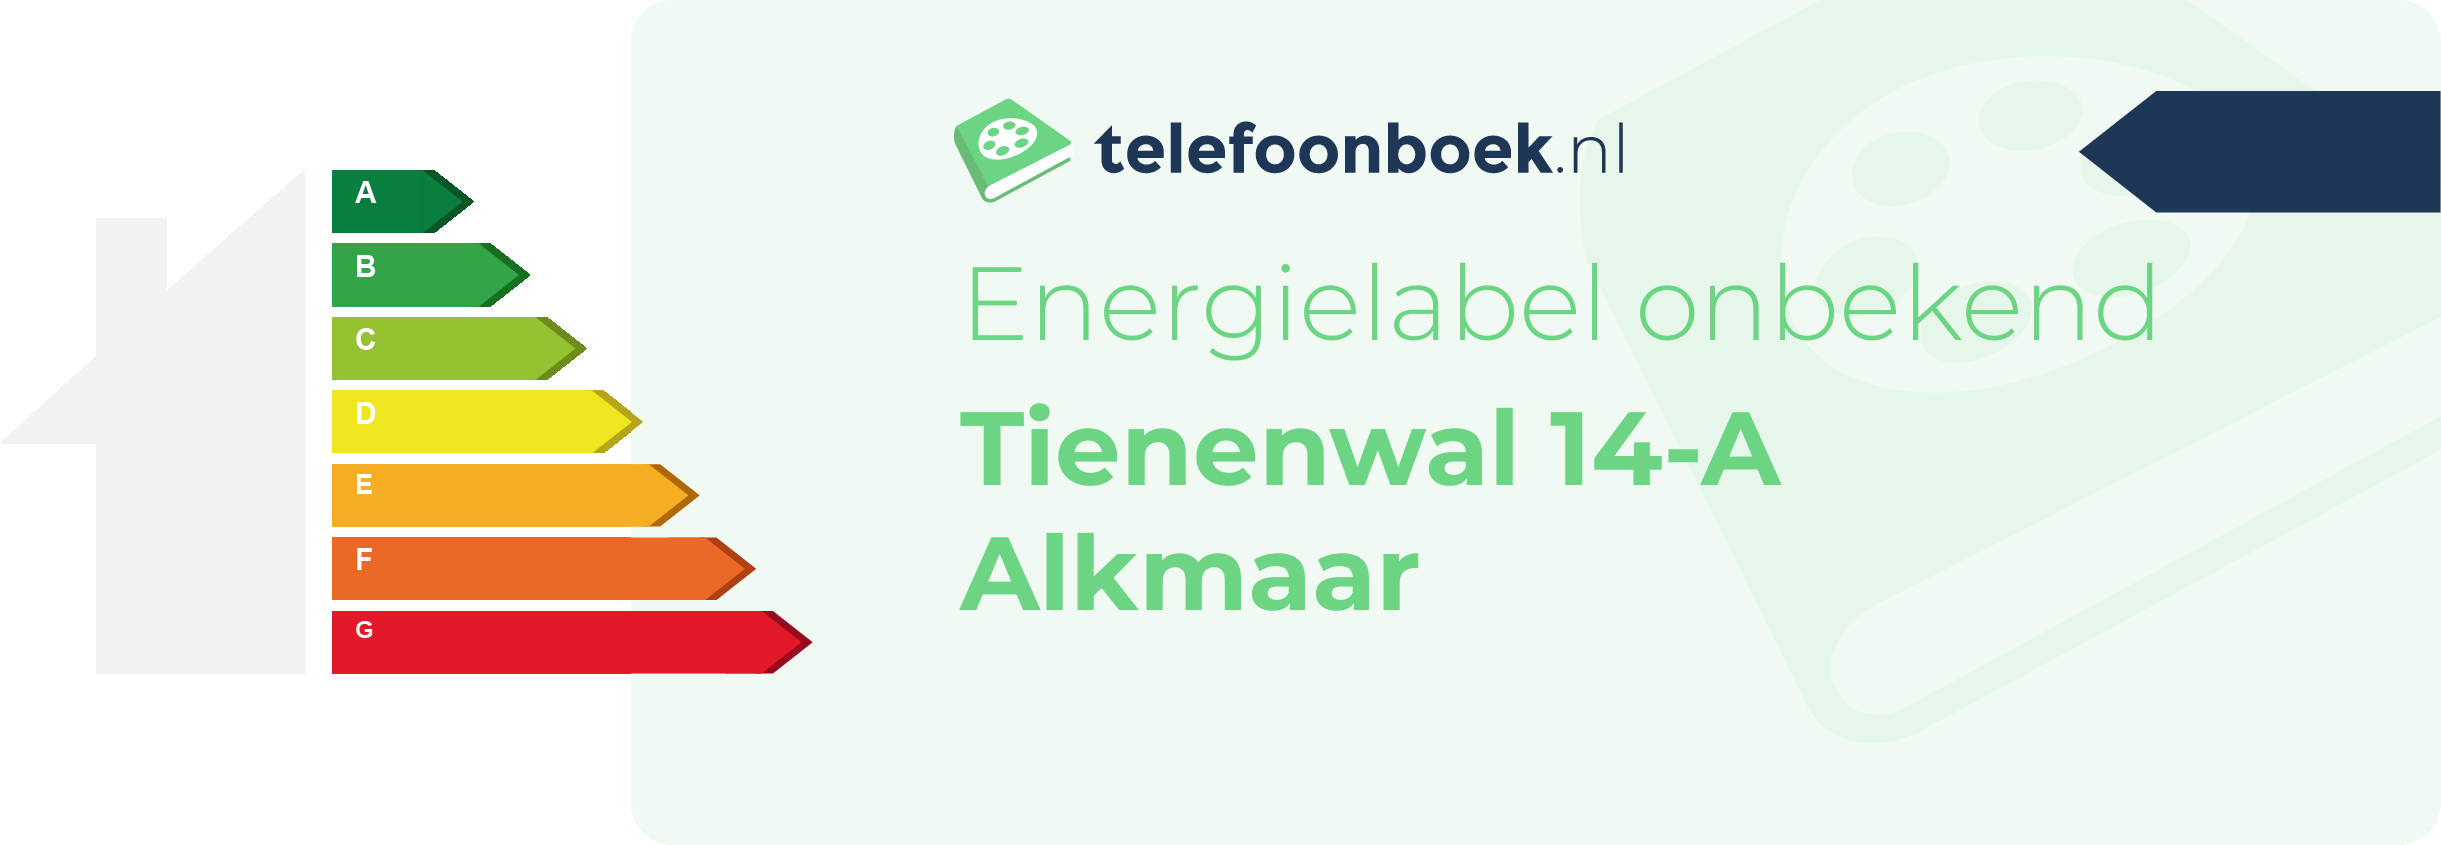 Energielabel Tienenwal 14-A Alkmaar